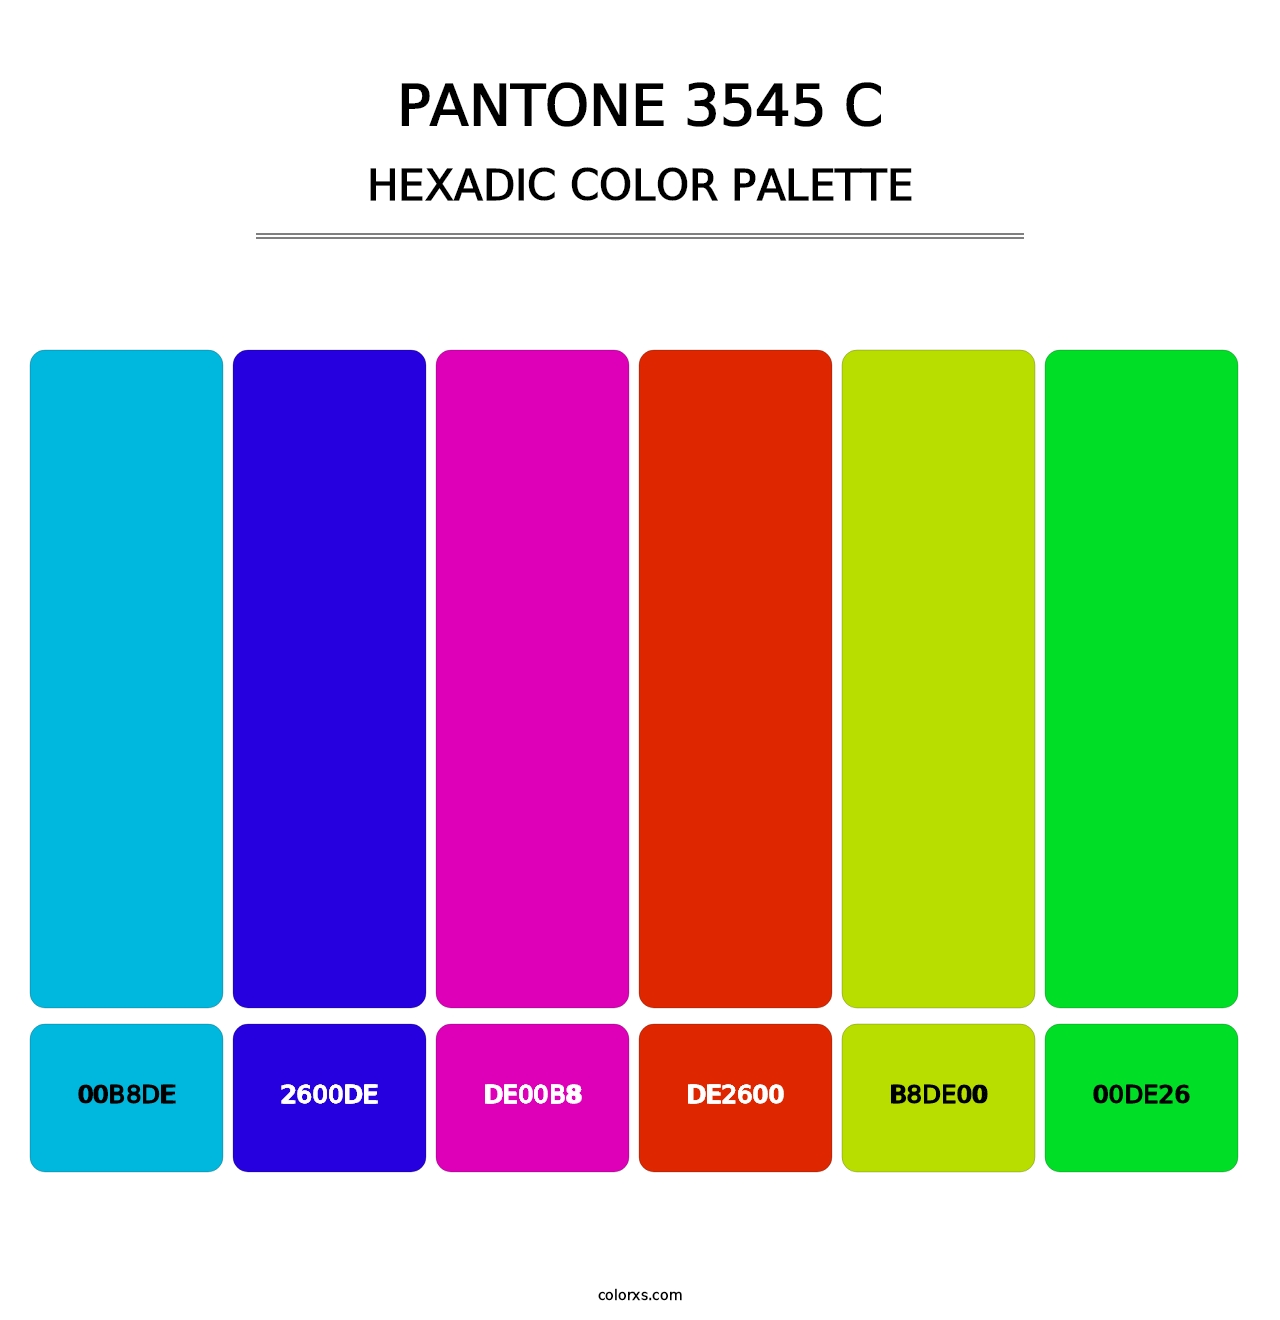 PANTONE 3545 C - Hexadic Color Palette